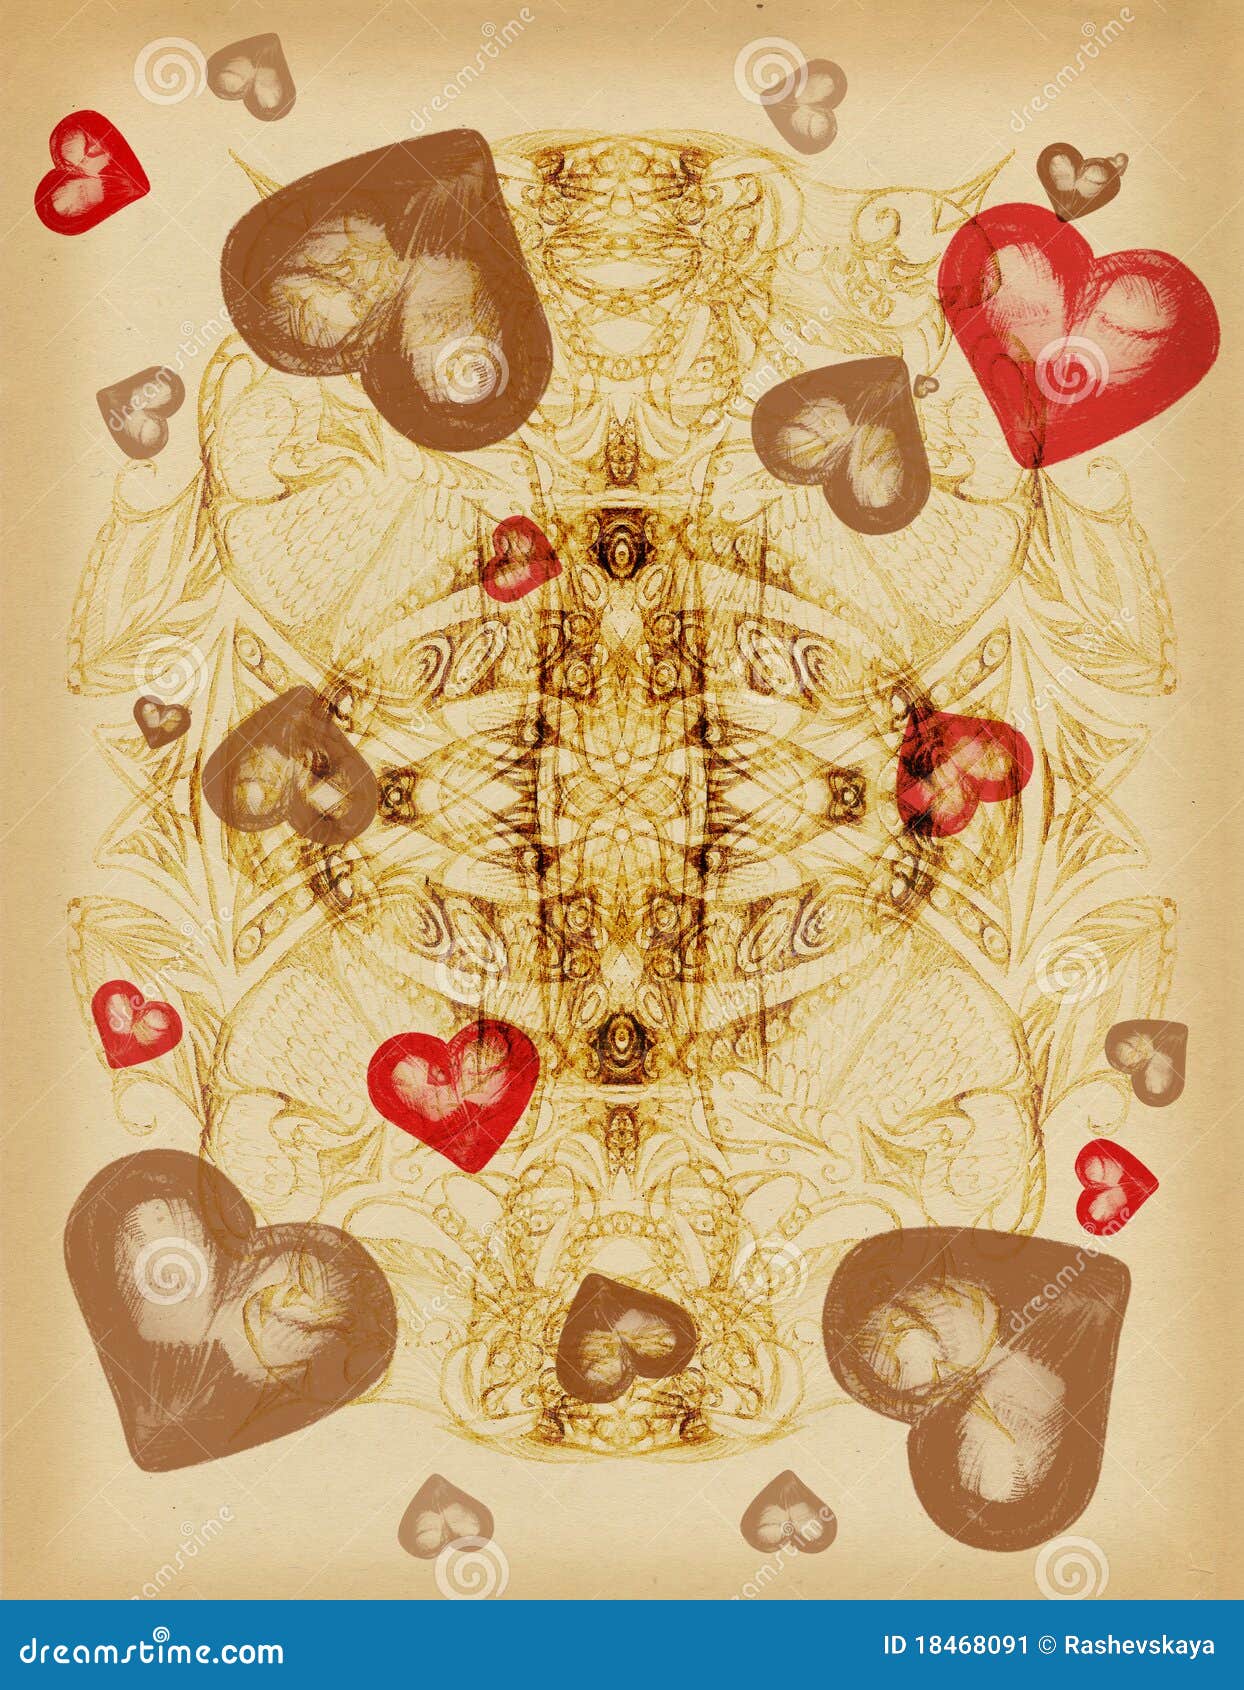 Background grunge - illustration with Heart